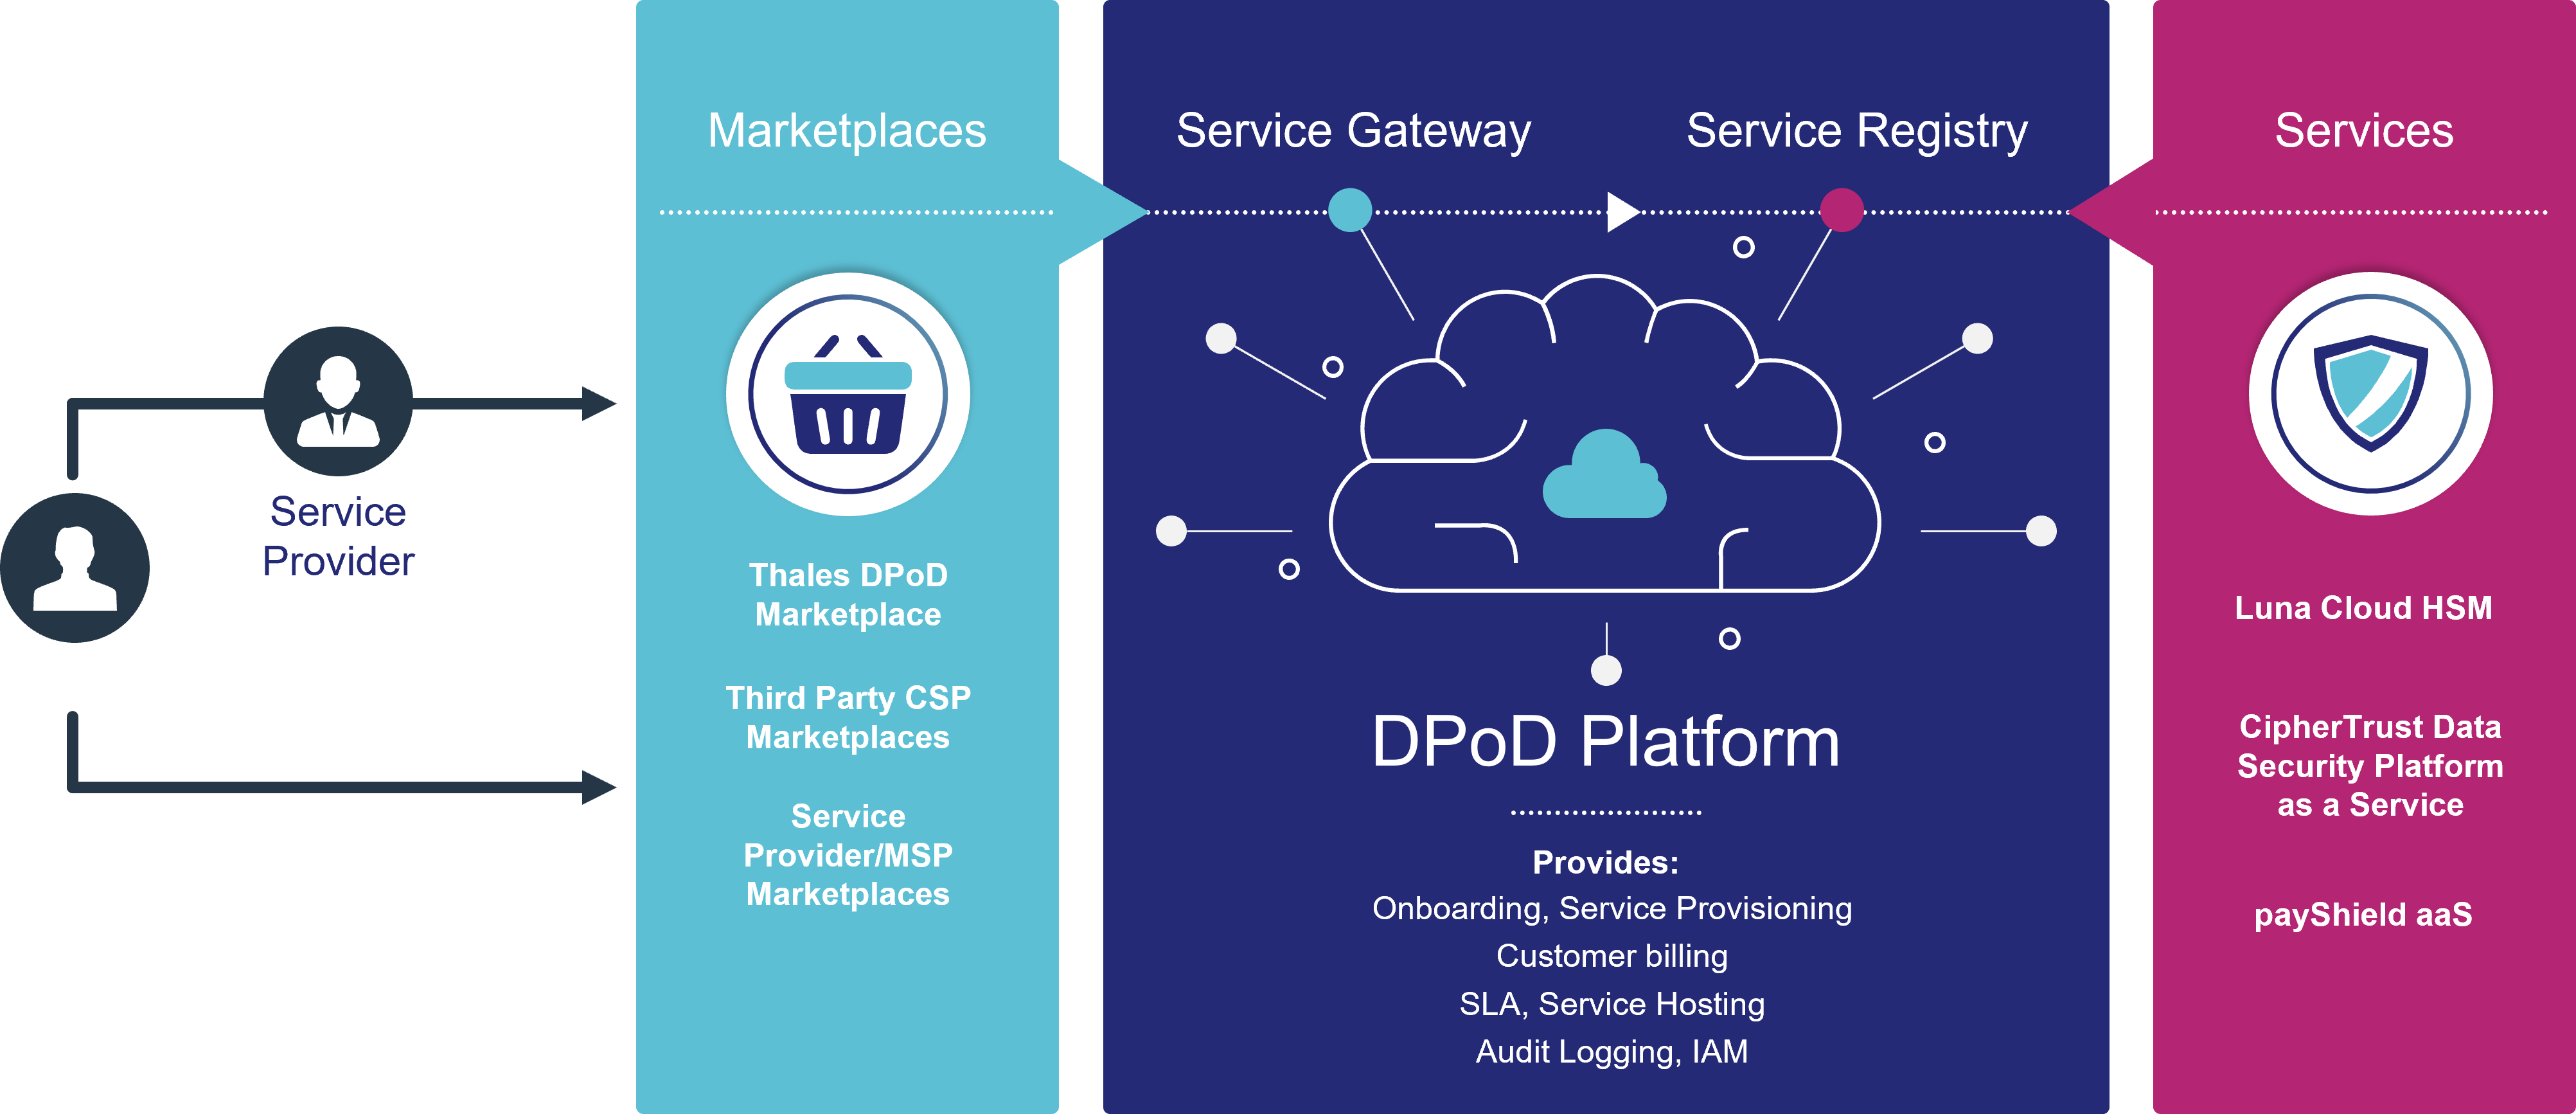 DPoD Platform Marketplace overview.